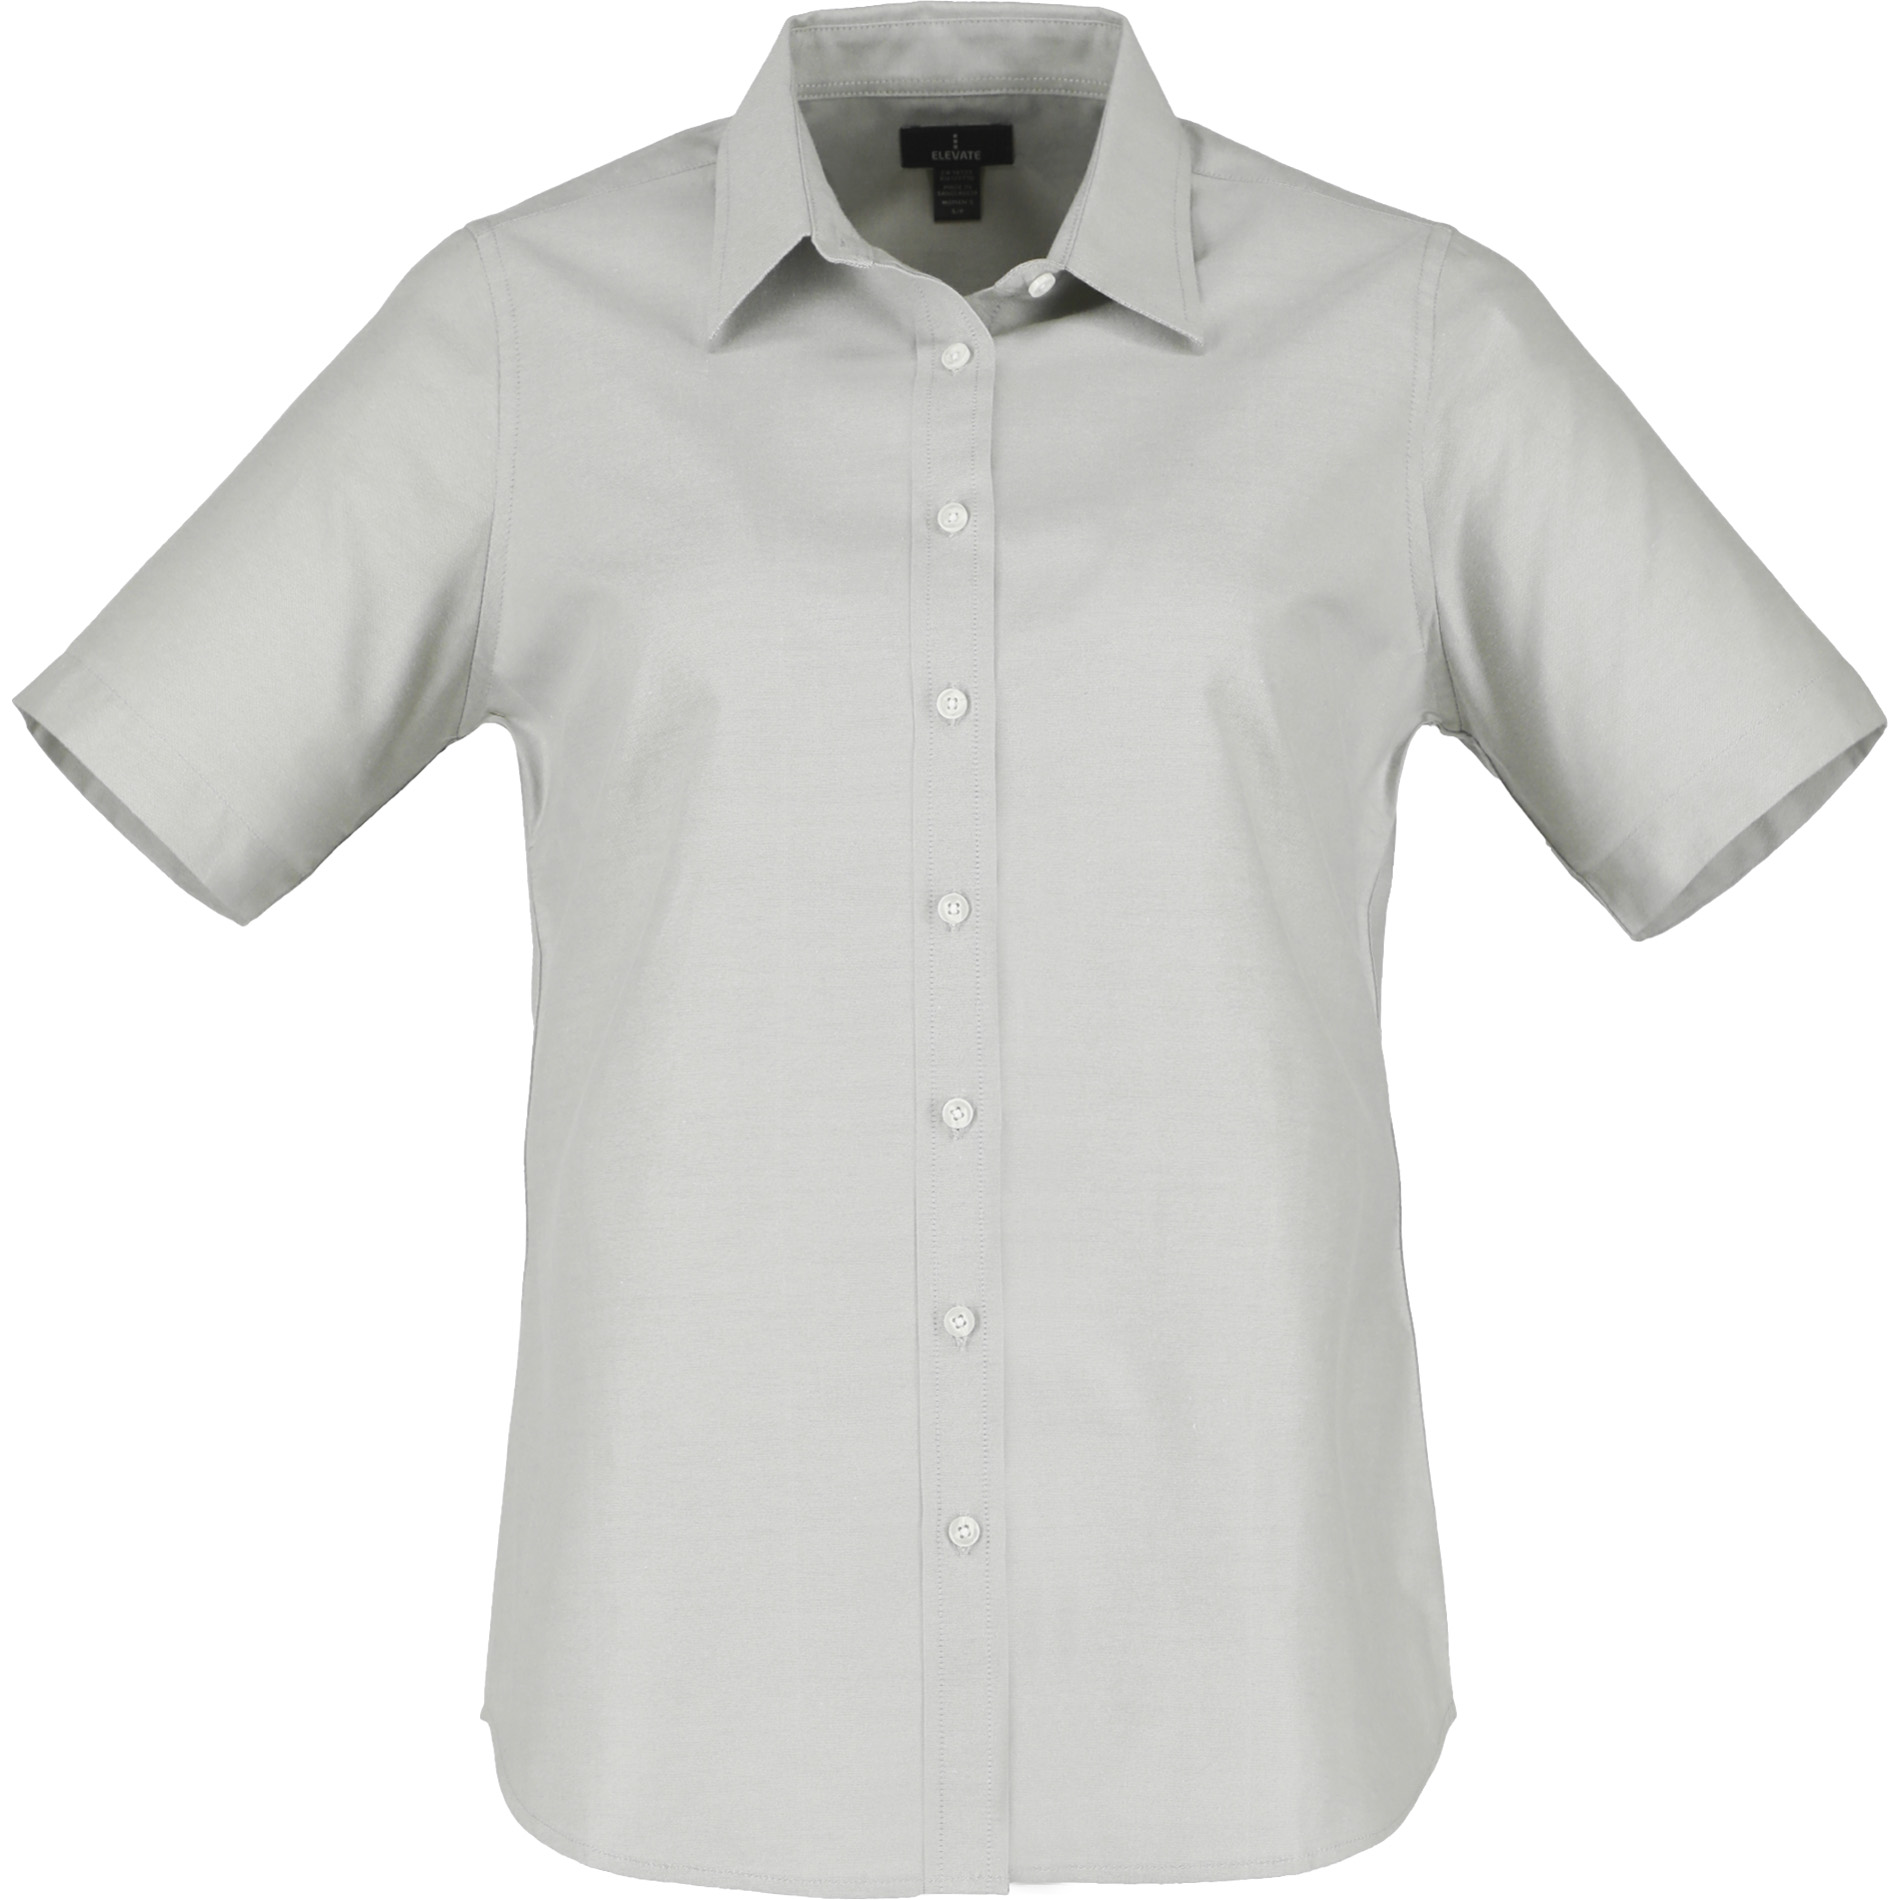 Trimark TM97702 - Women's SAMSON Oxford Short Sleeve Shirt